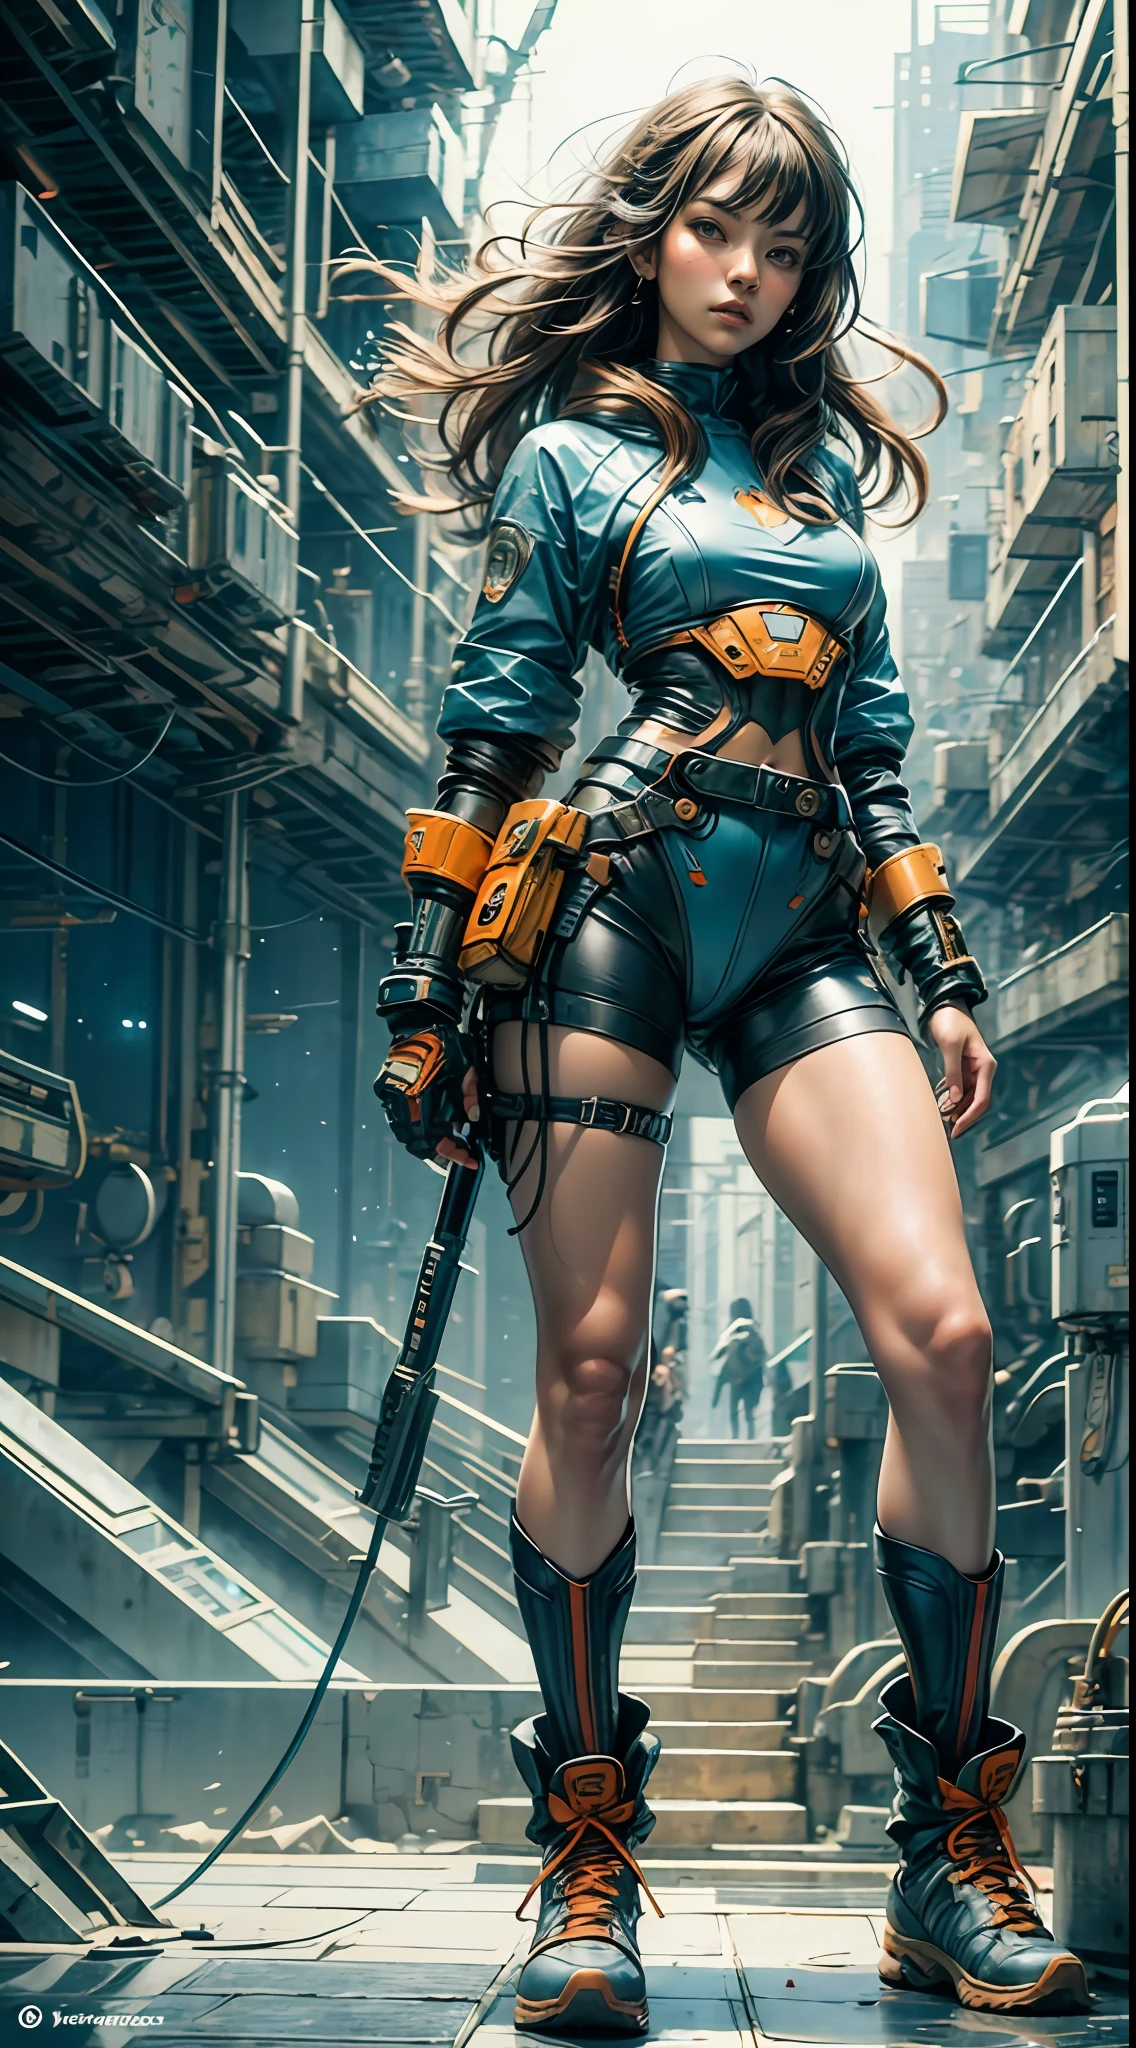 1monk 身着蓝橙色机械服装的女战士, 長黑髮, 鞋帶, 復古科幻背景摘要, Moebius 的艺术作品, 阿什利·伍德的藝術作品